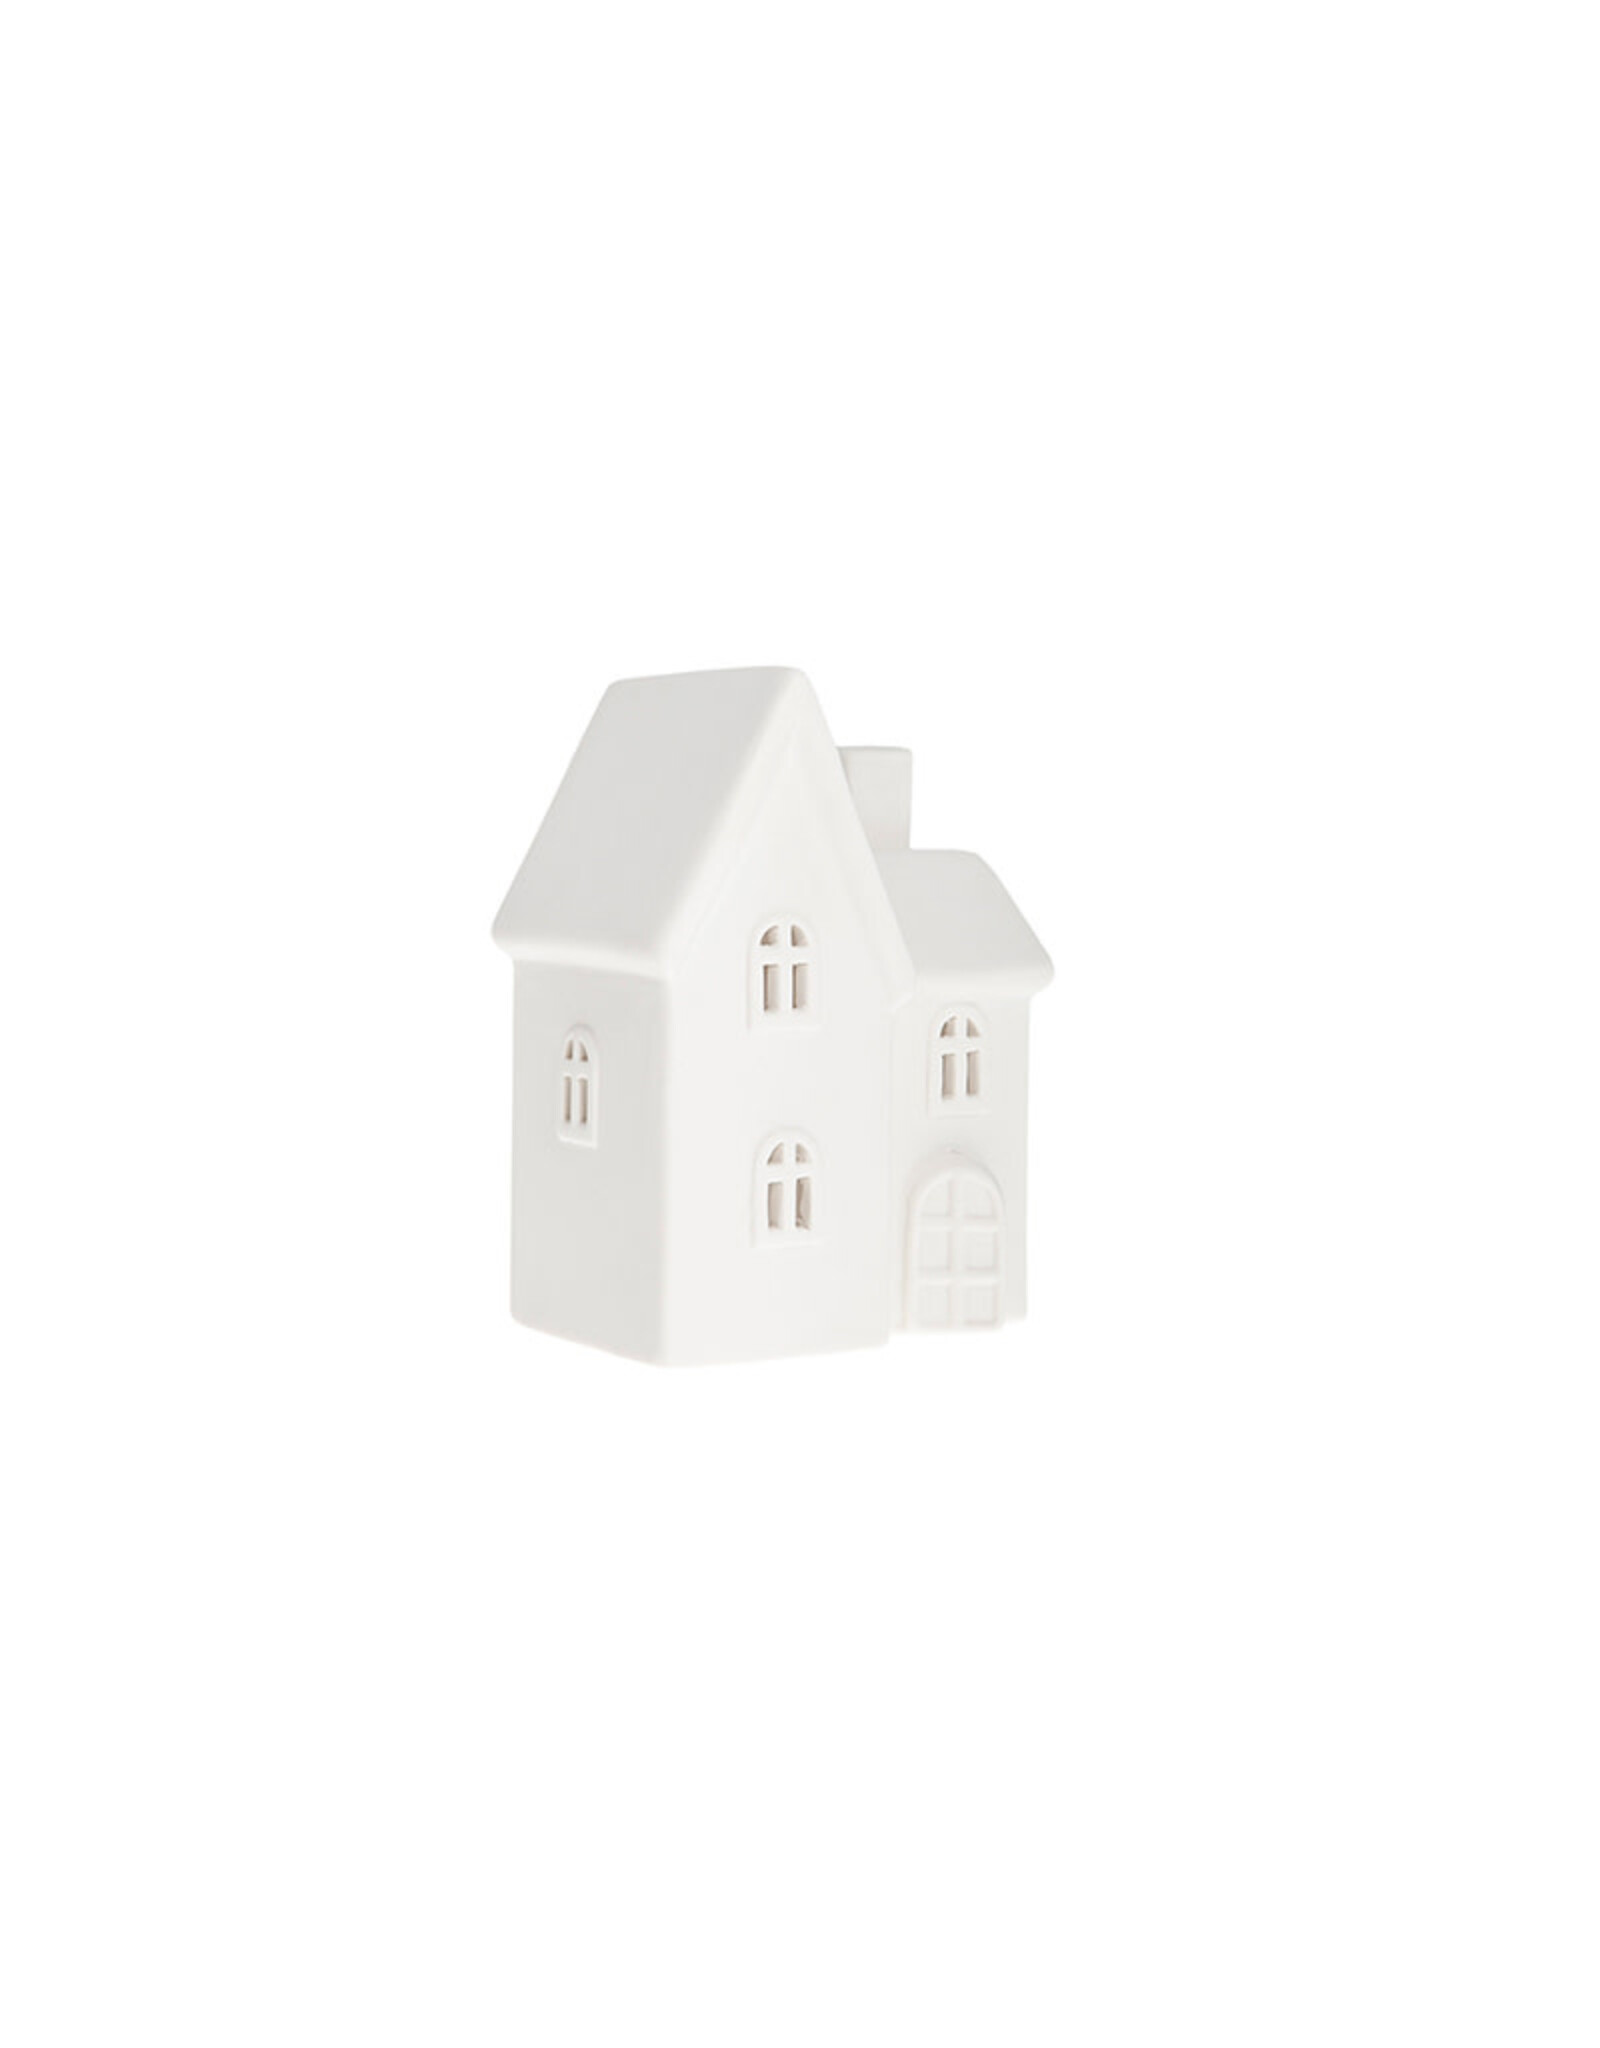 Storefactory Byn N° 11 White Ceramic House